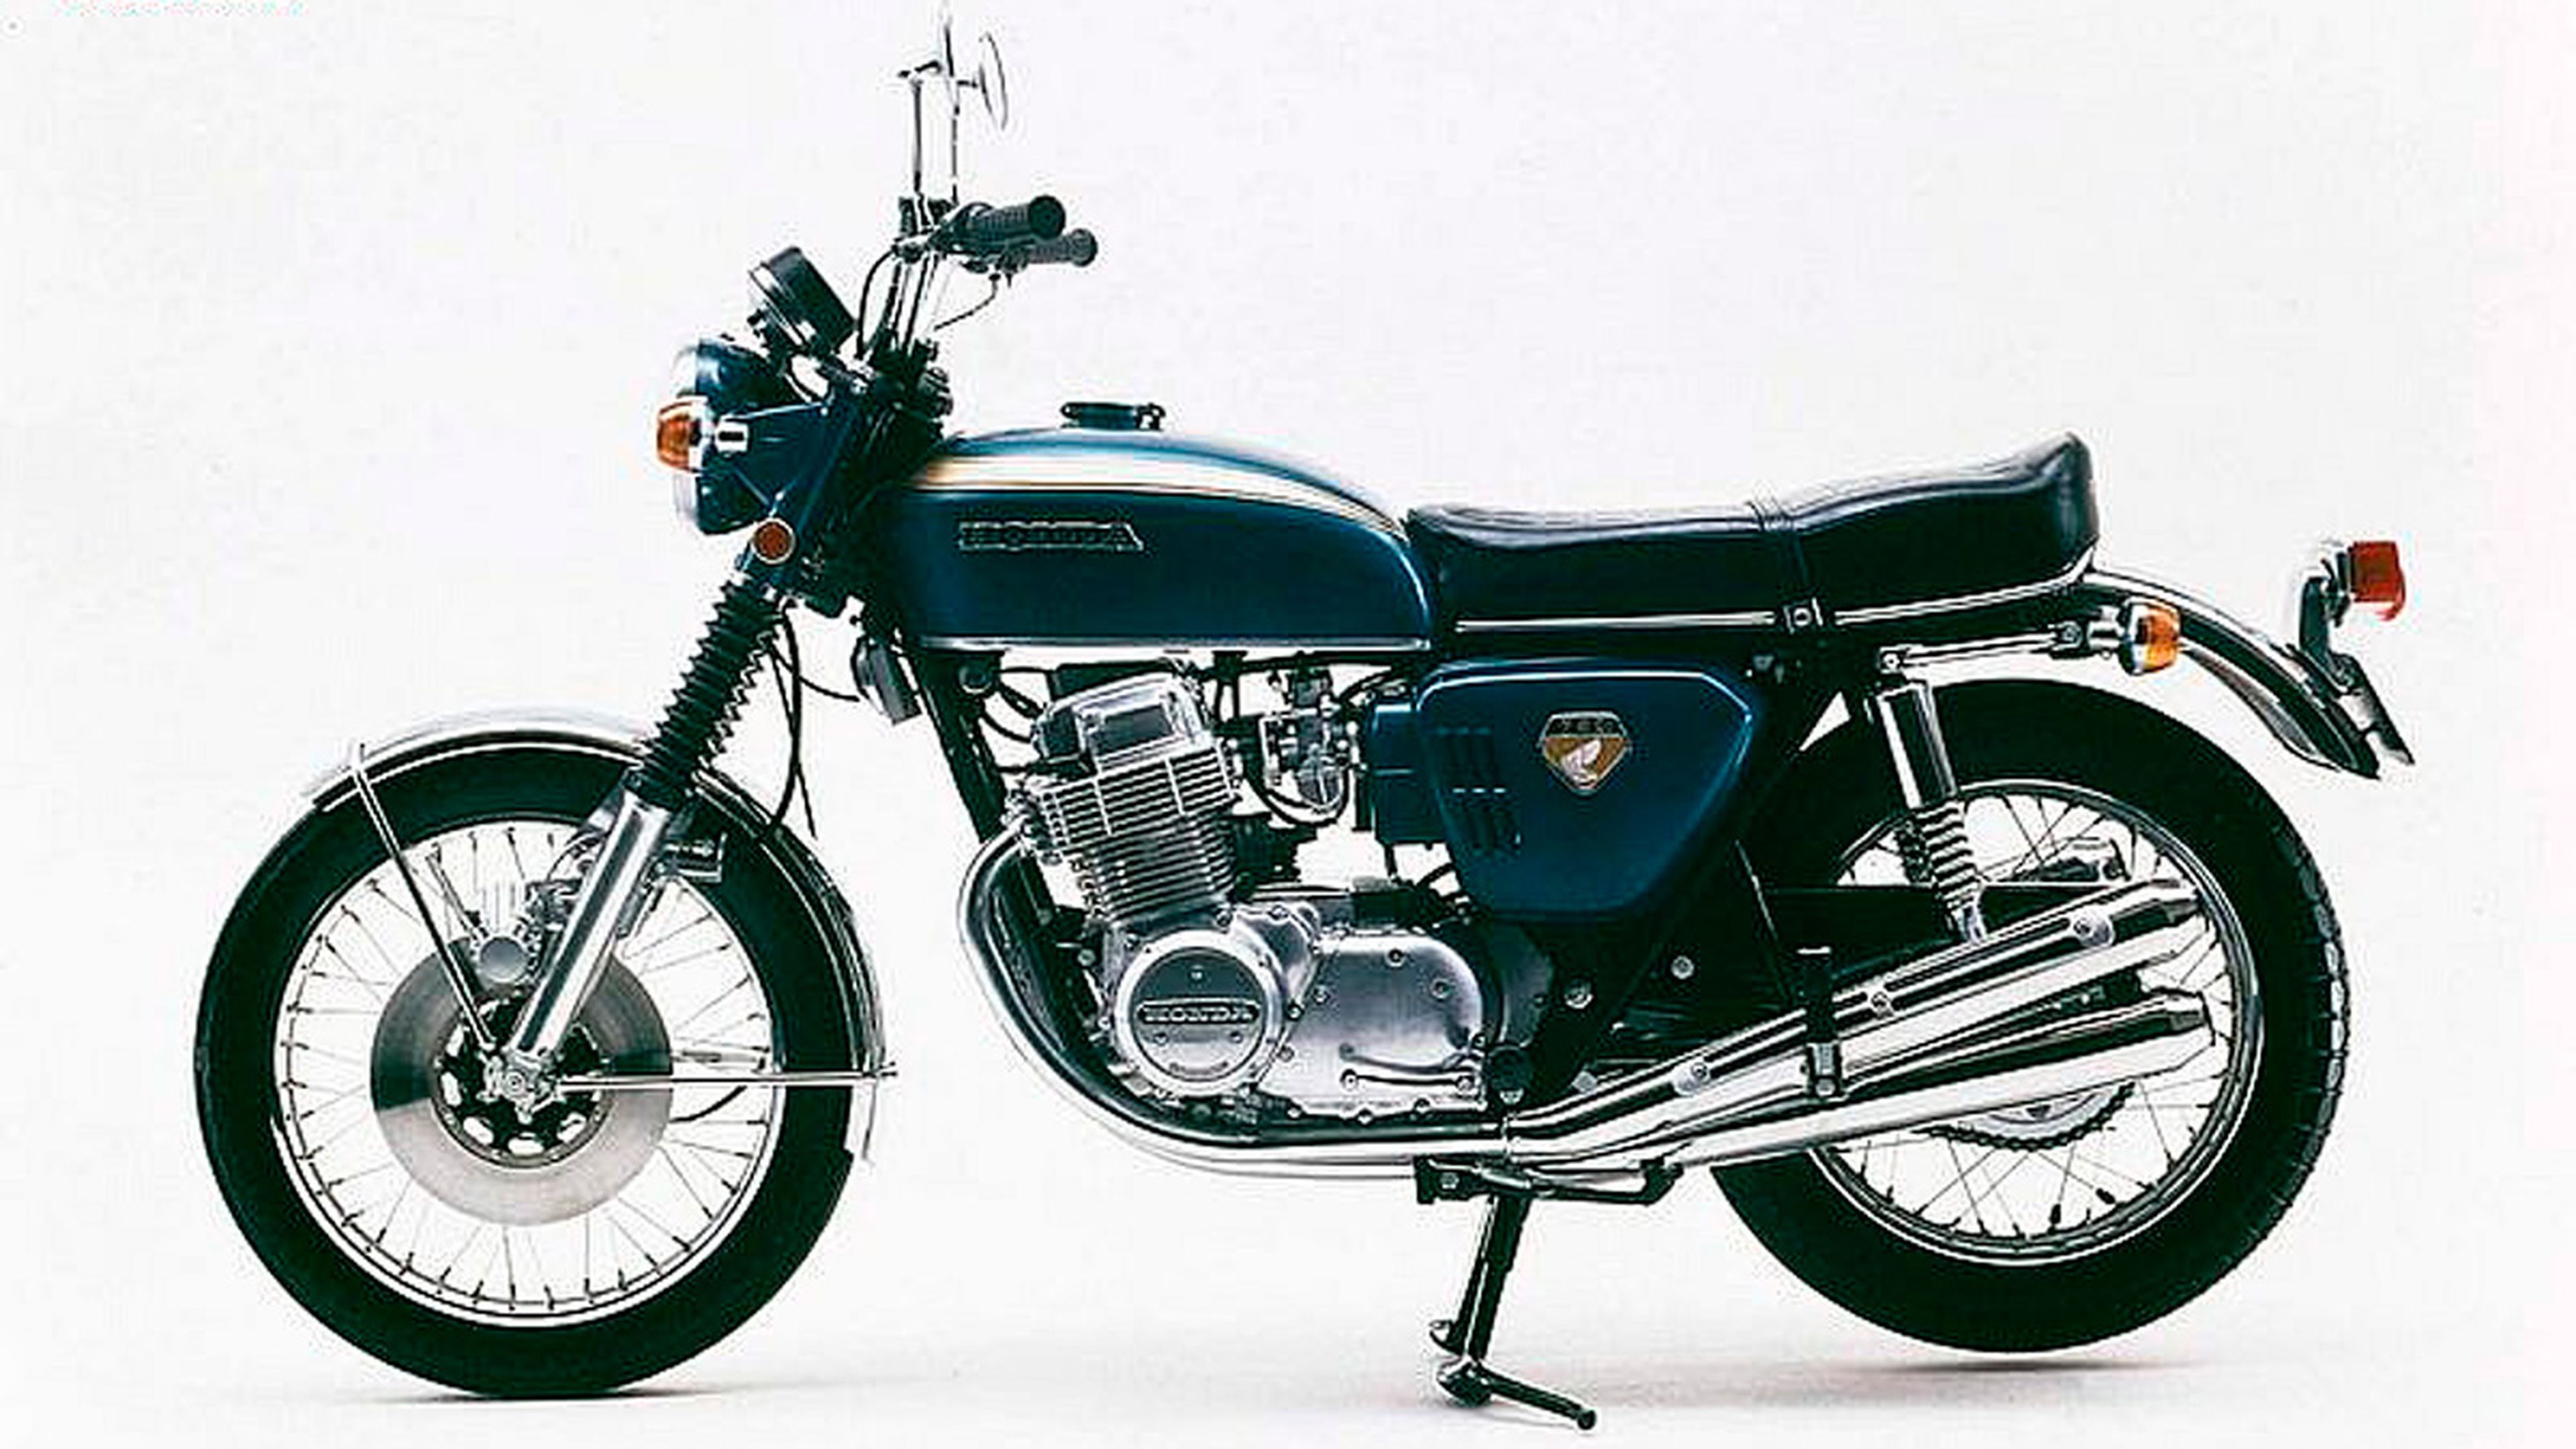 Motos más importantes: Honda CB 750 Four